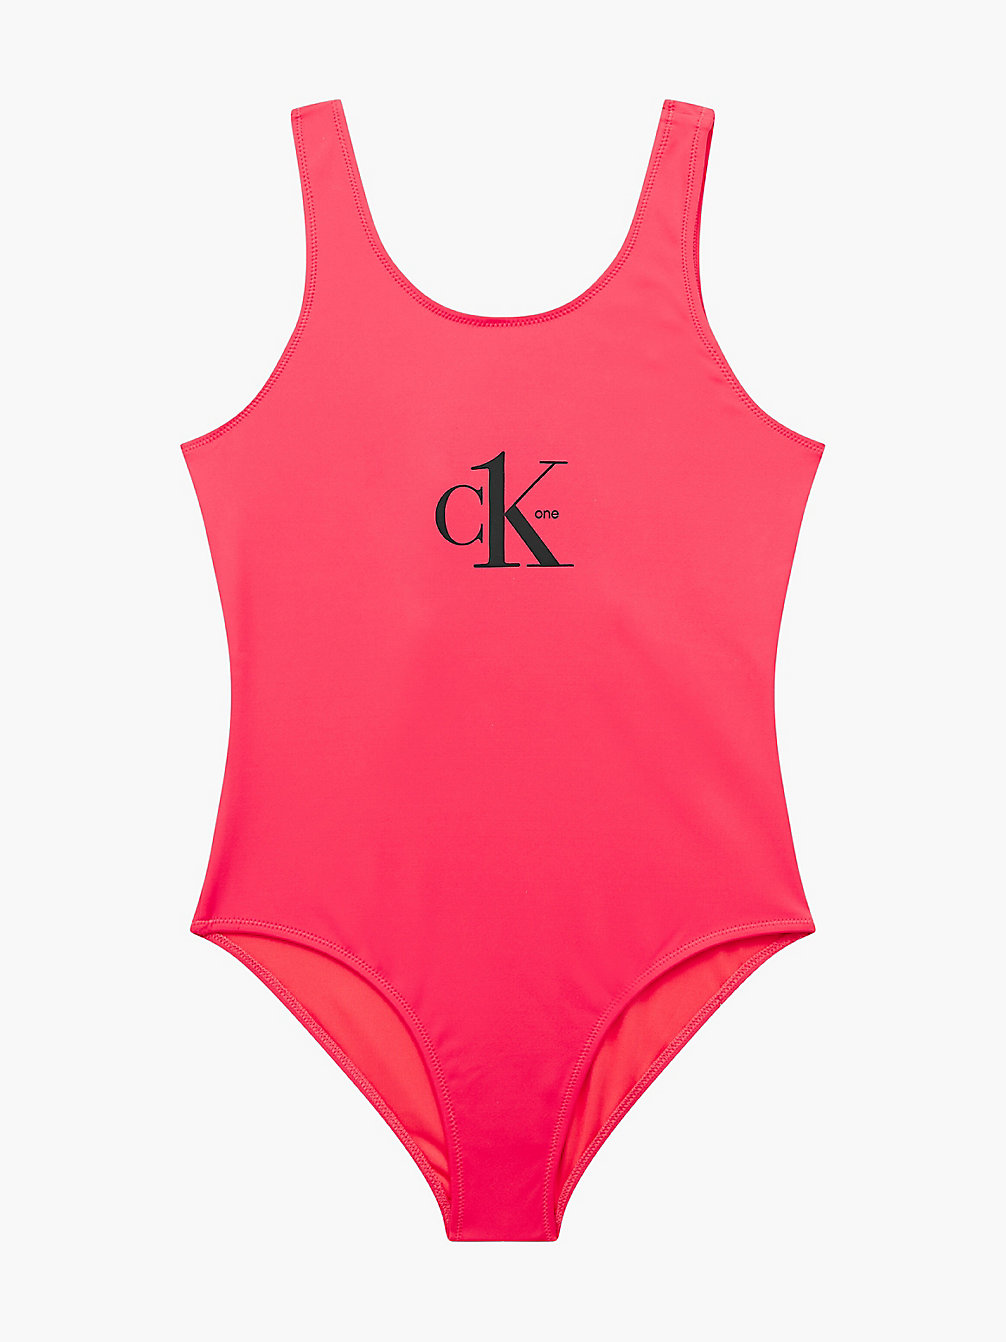 CORAL CRUSH Girls Swimsuit - CK One undefined girls Calvin Klein